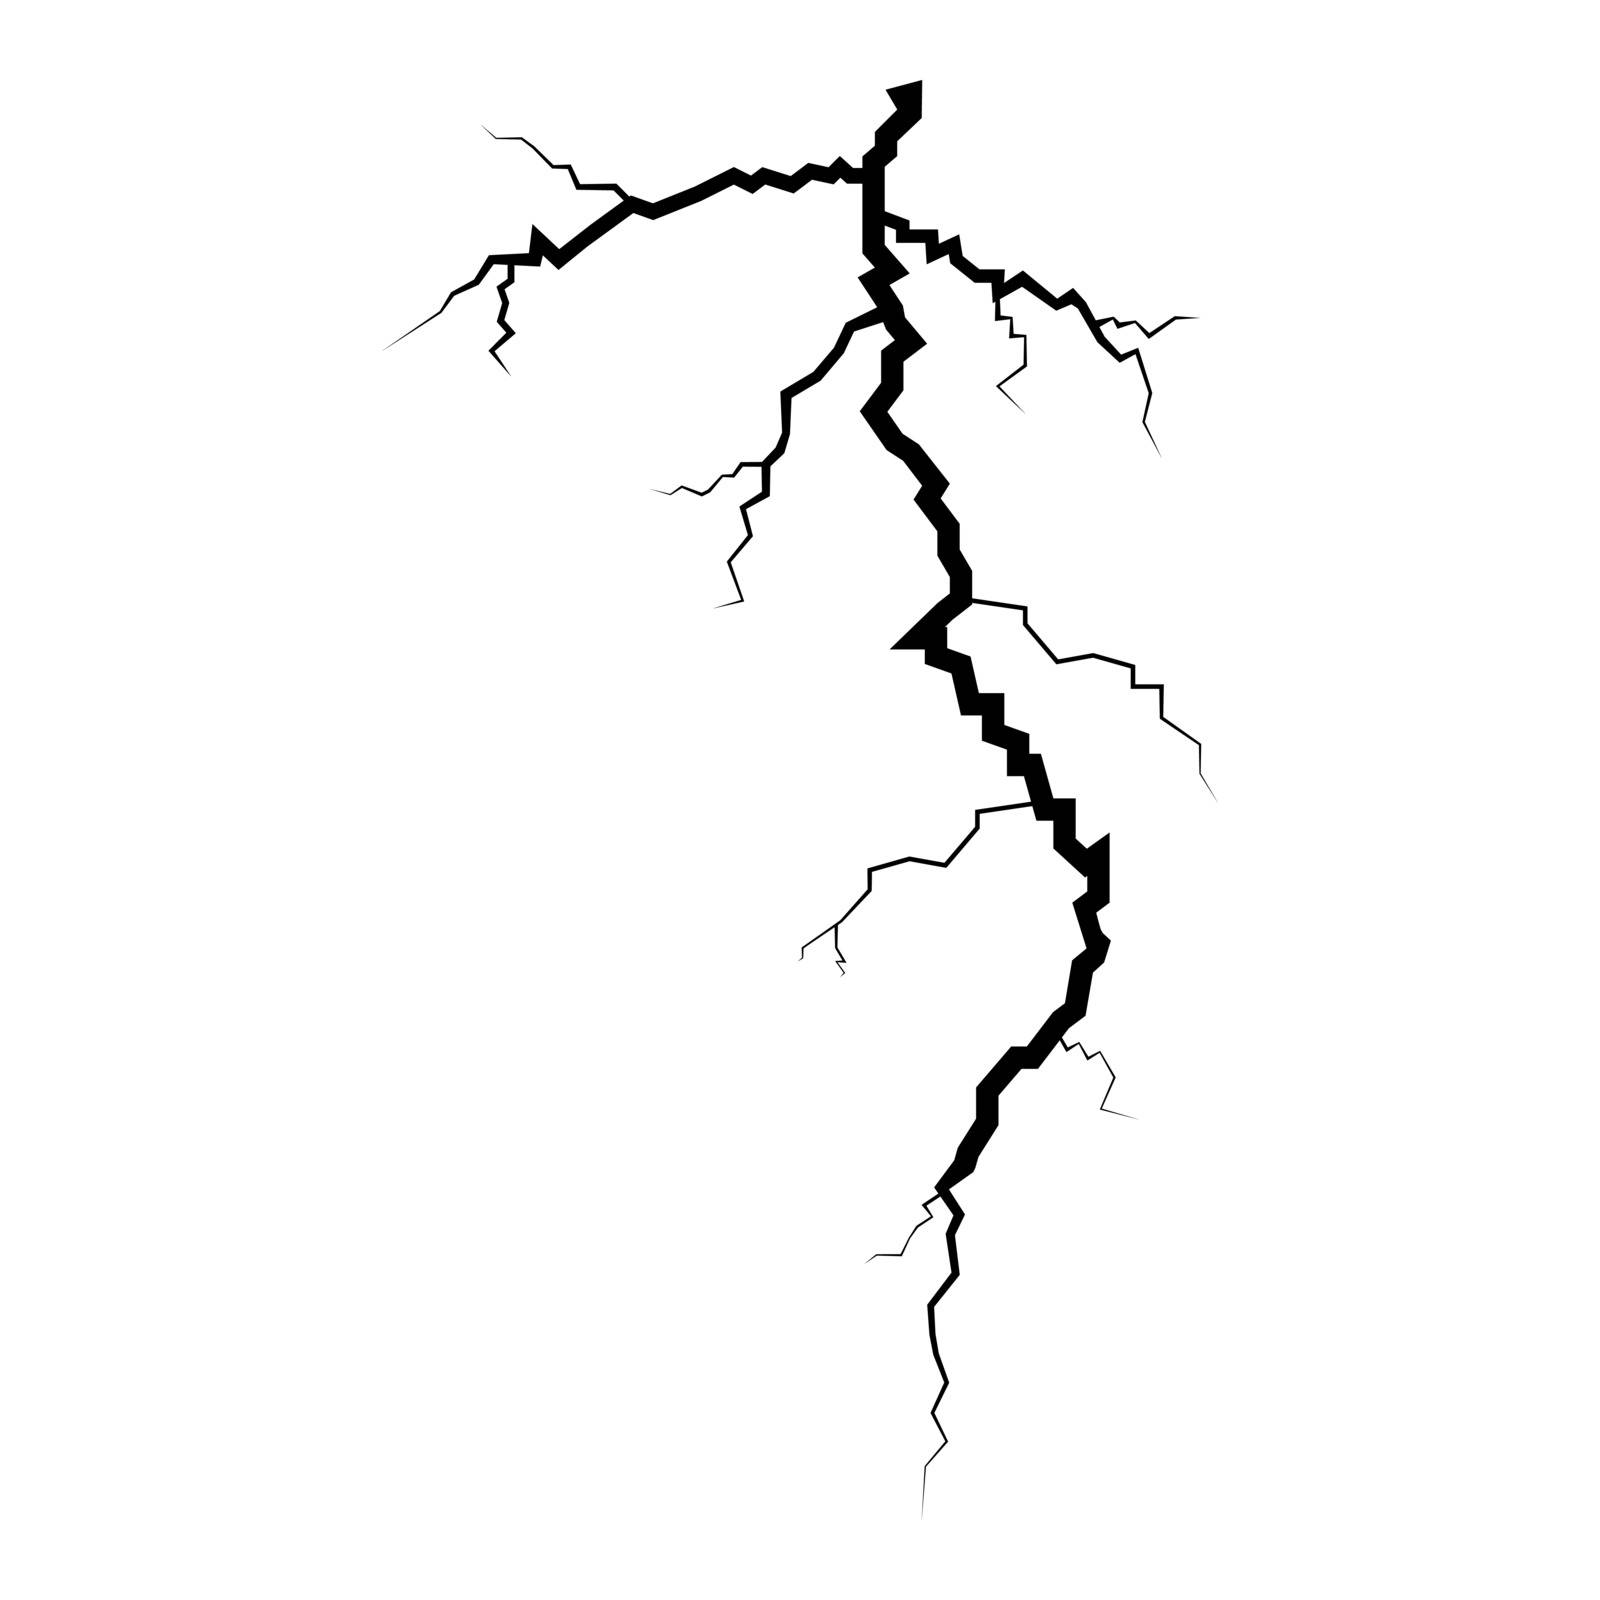 Thunderstorm crack icon black colour image